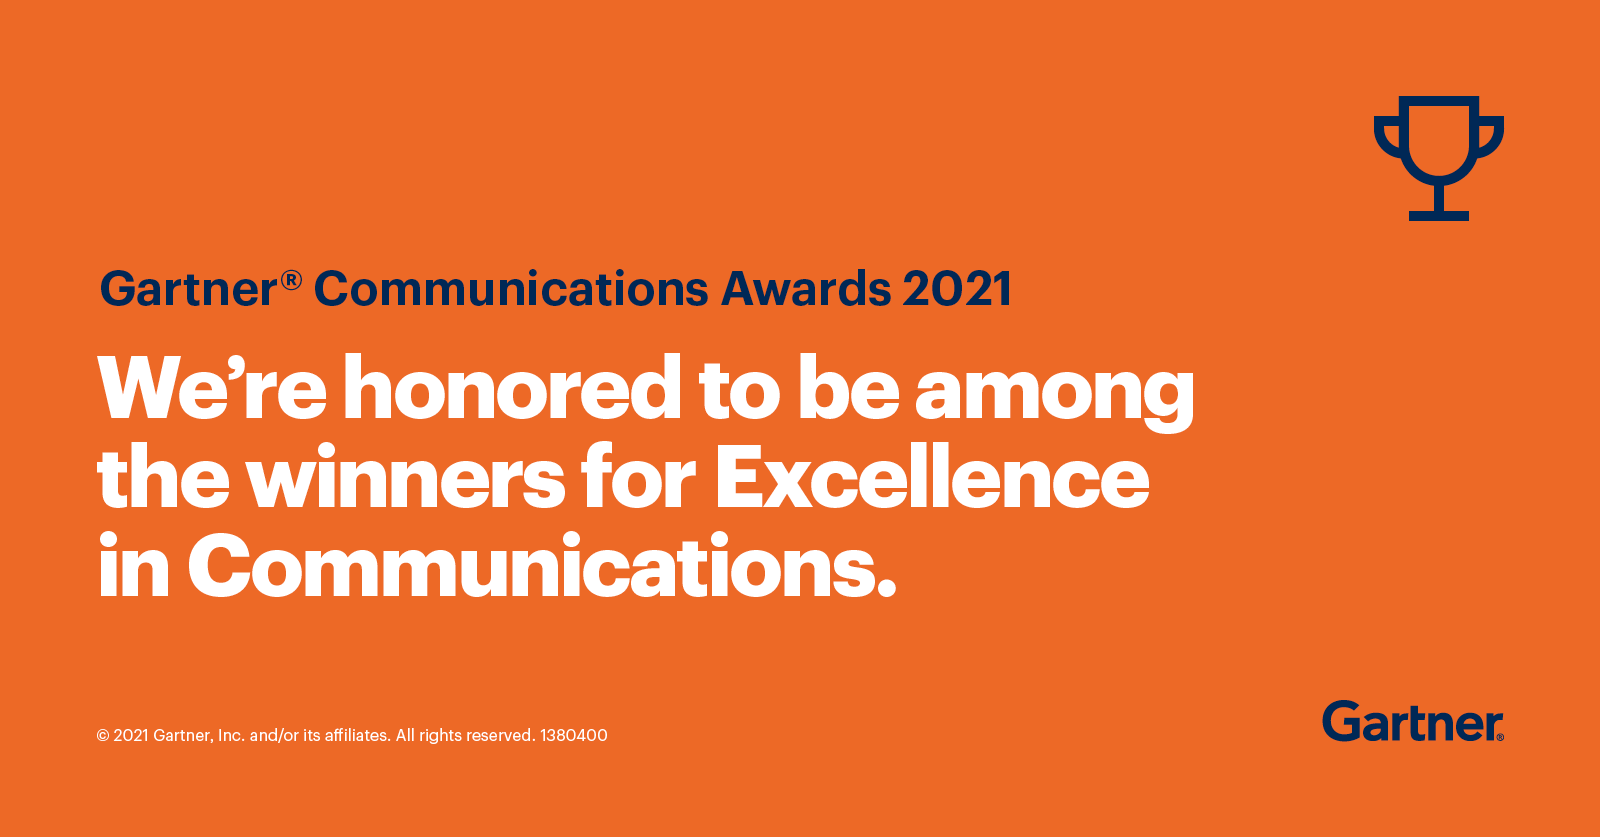 DSMN8 and Unit4 WIN Gartner’s Excellence in Communications Award